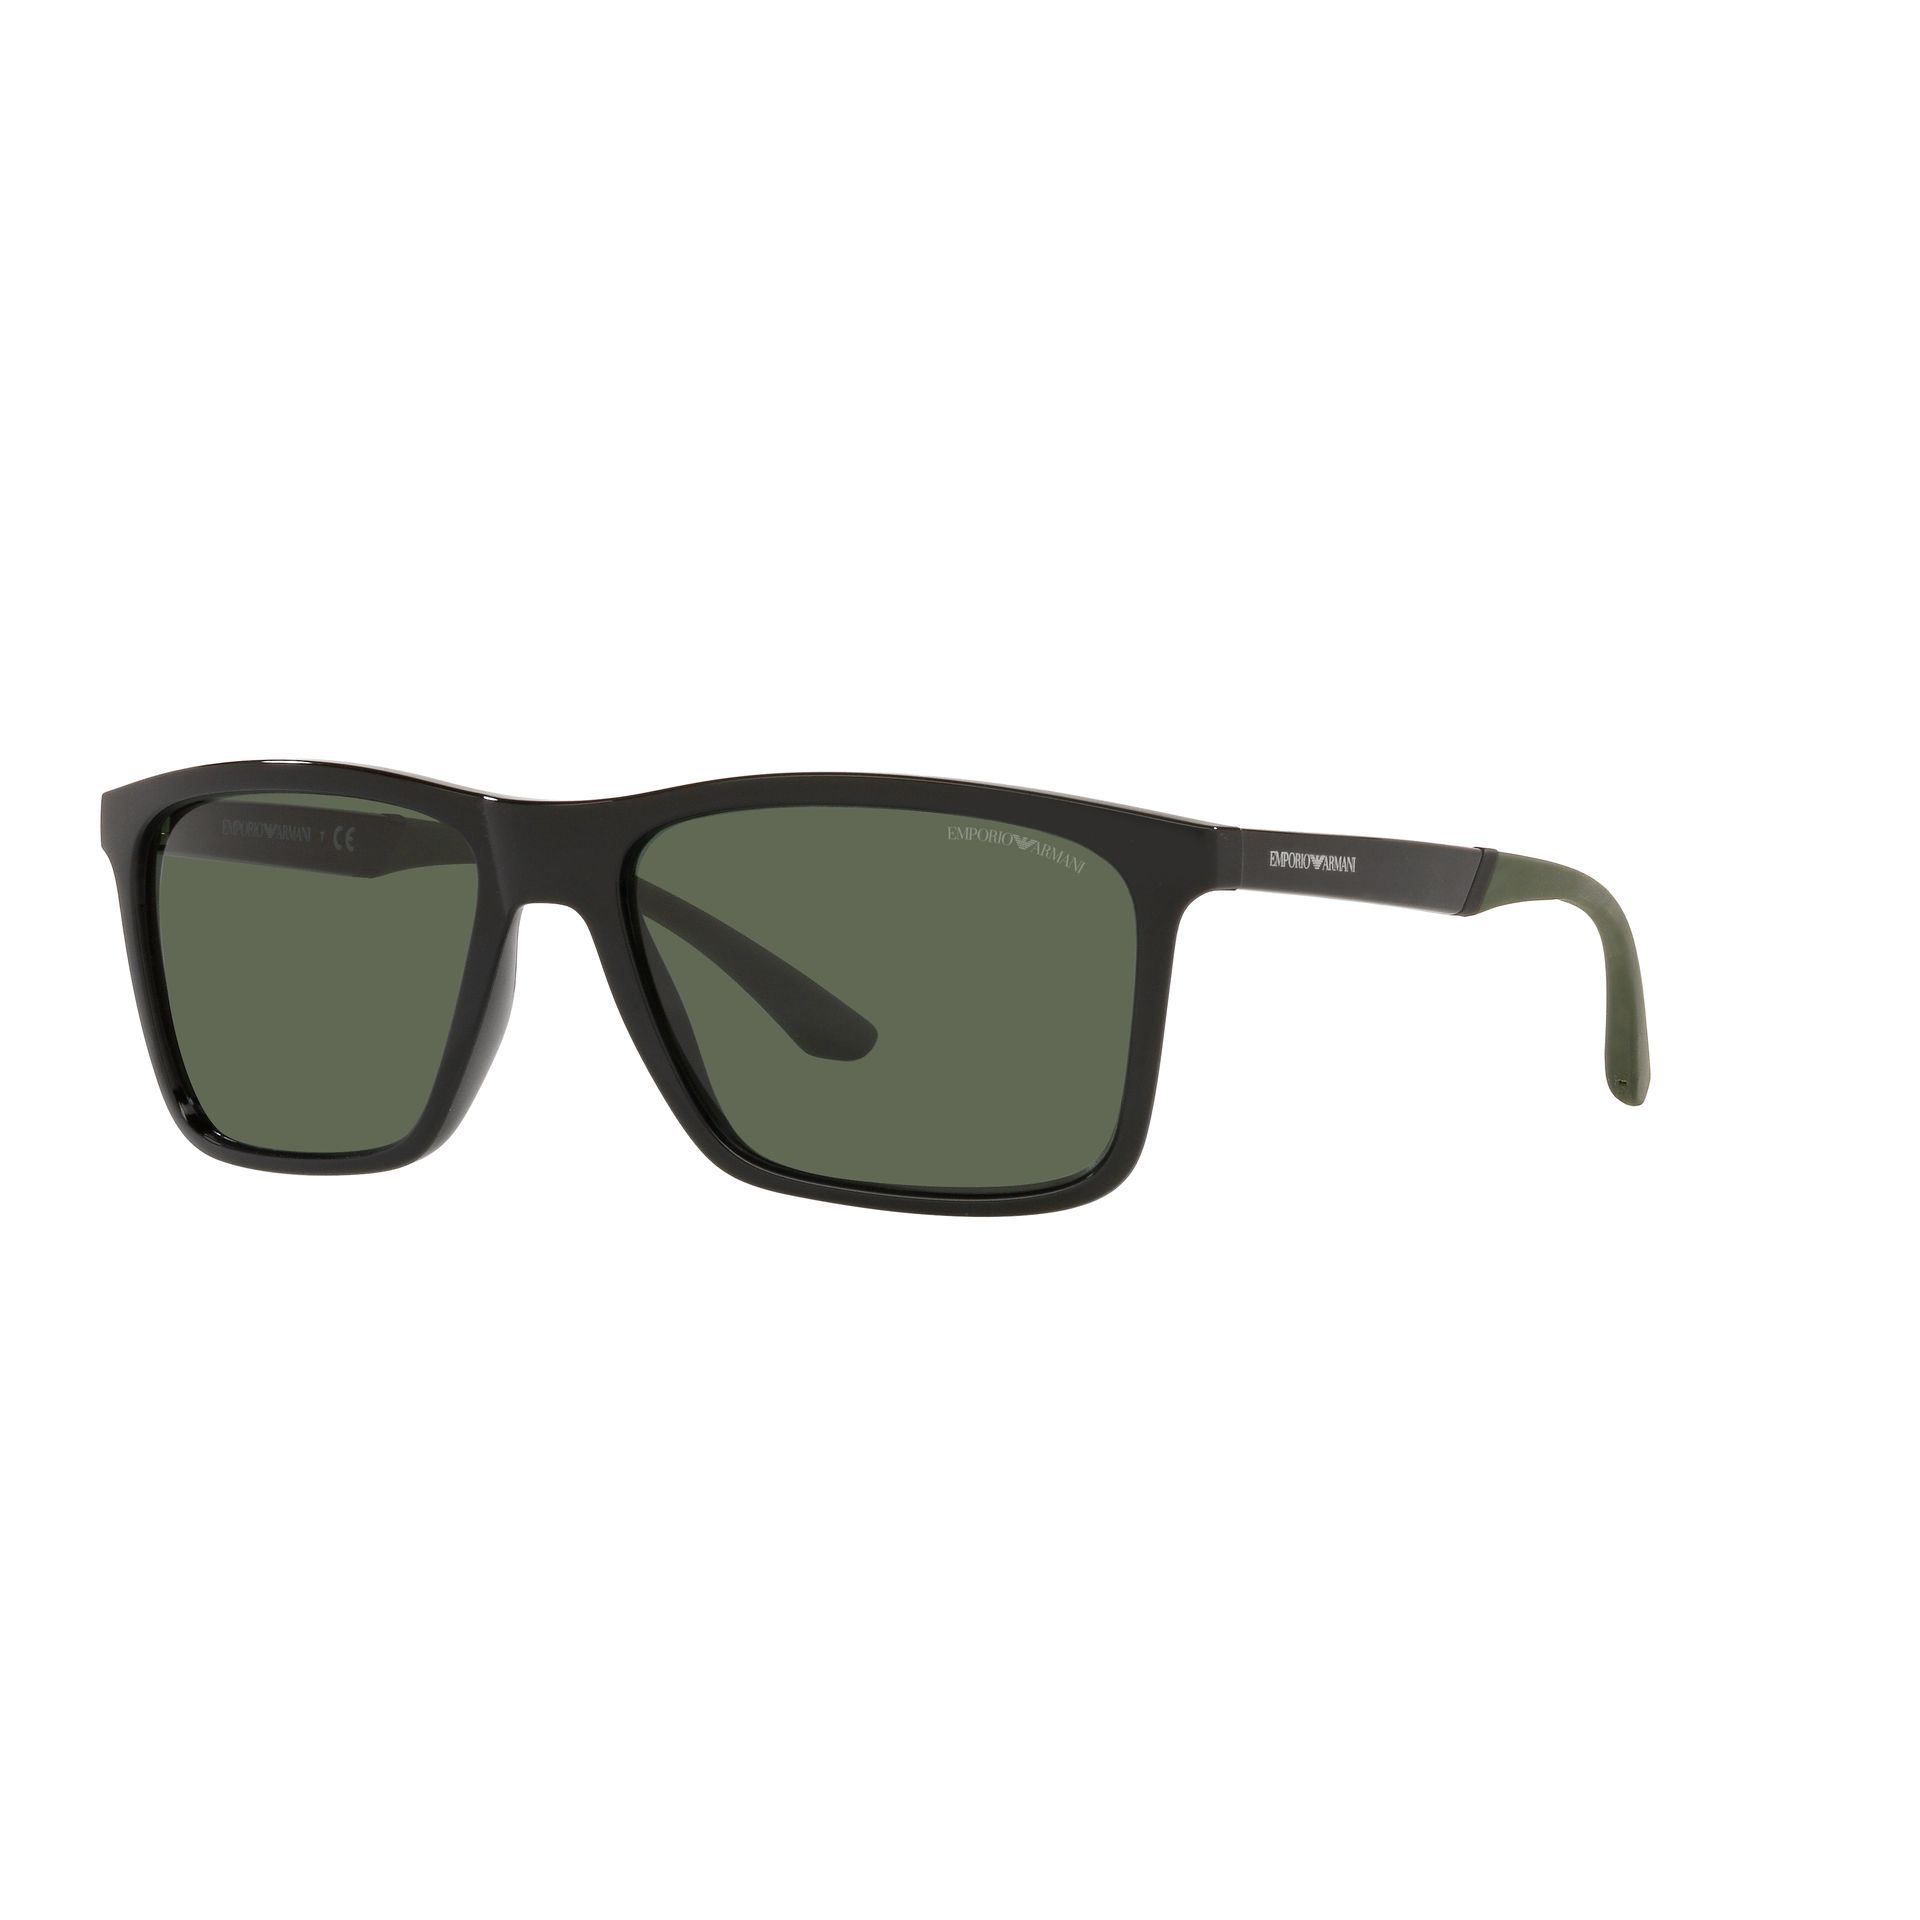 EA4170 Rectangle Sunglasses 501771 - size 58